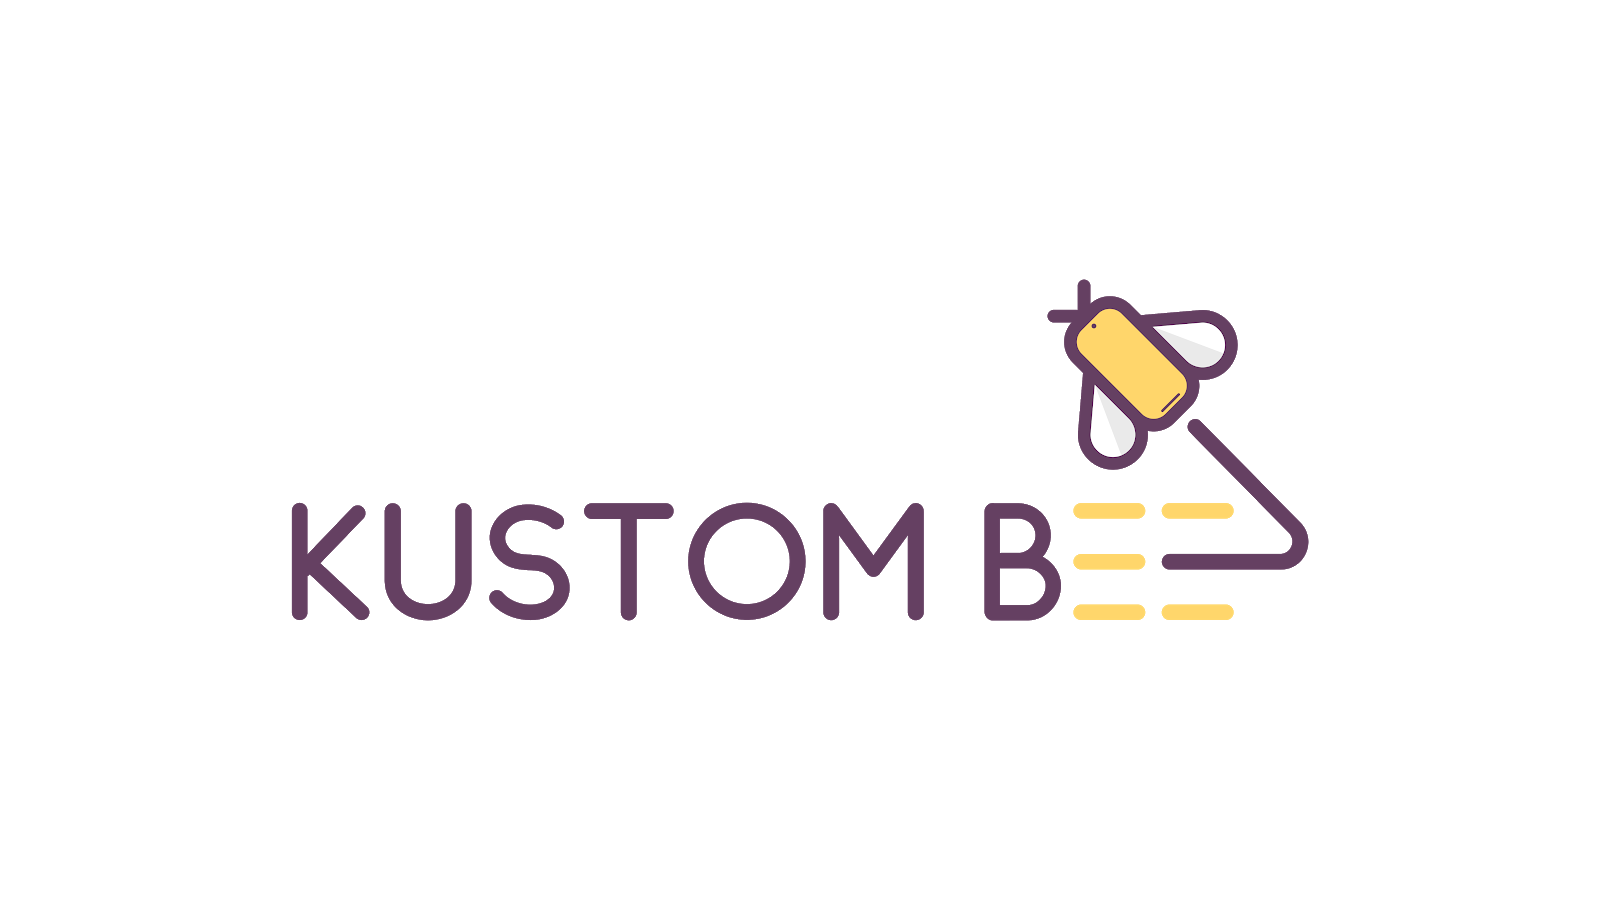 Kustom Bee - Android Home Screen Setups